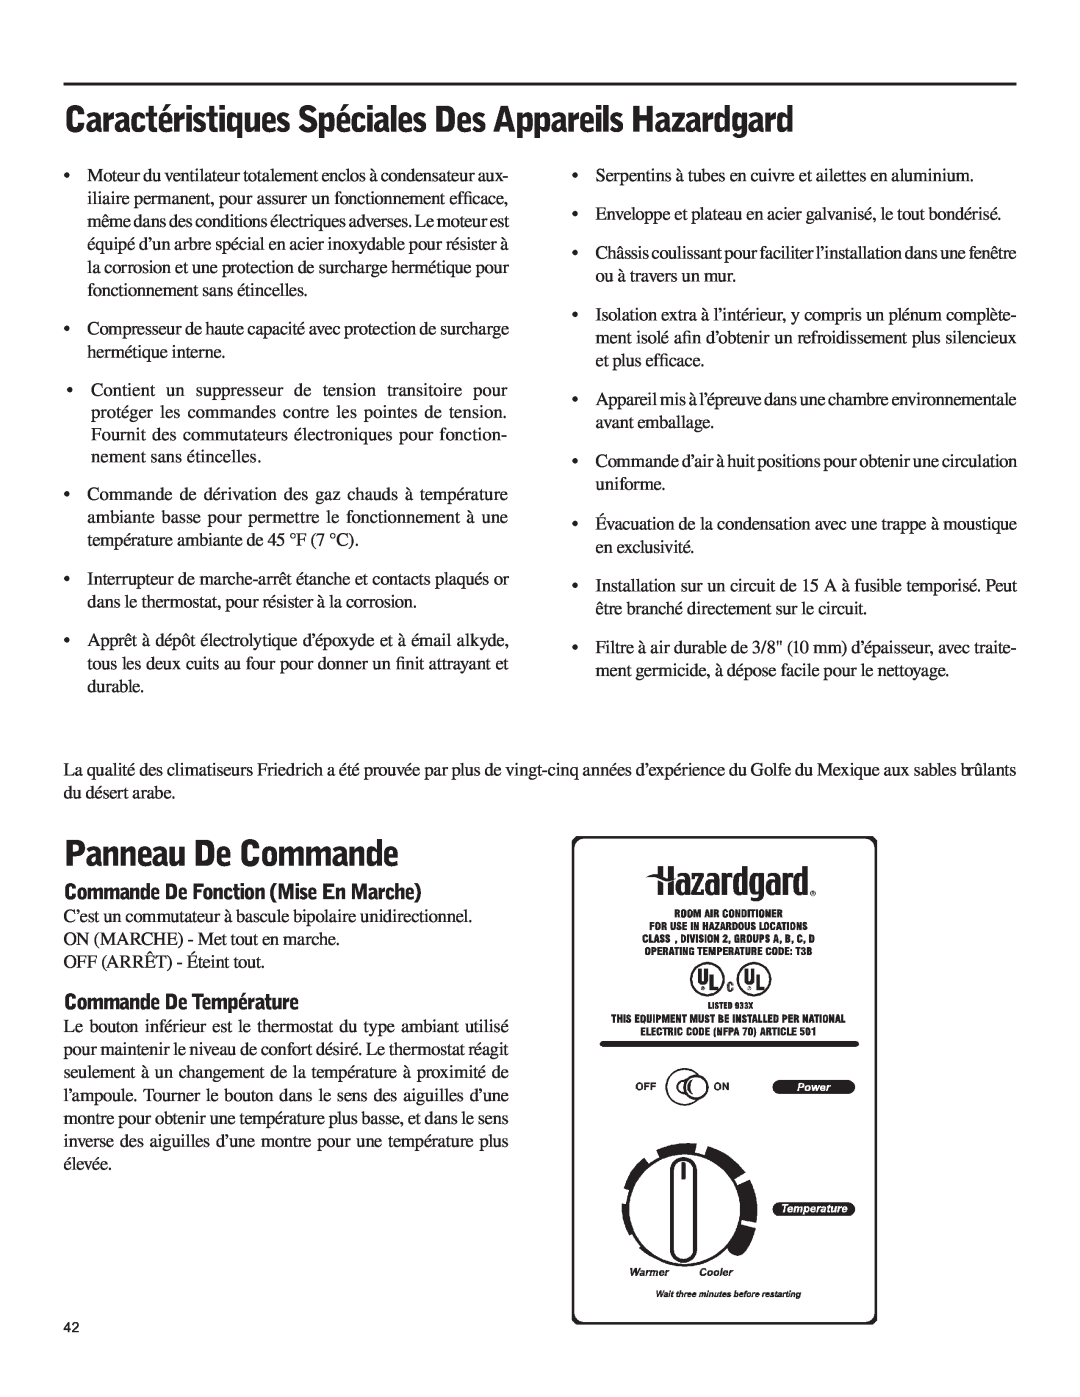 Friedrich SH15 operation manual Panneau De Commande, Commande De Fonction Mise En Marche, Commande De Température 